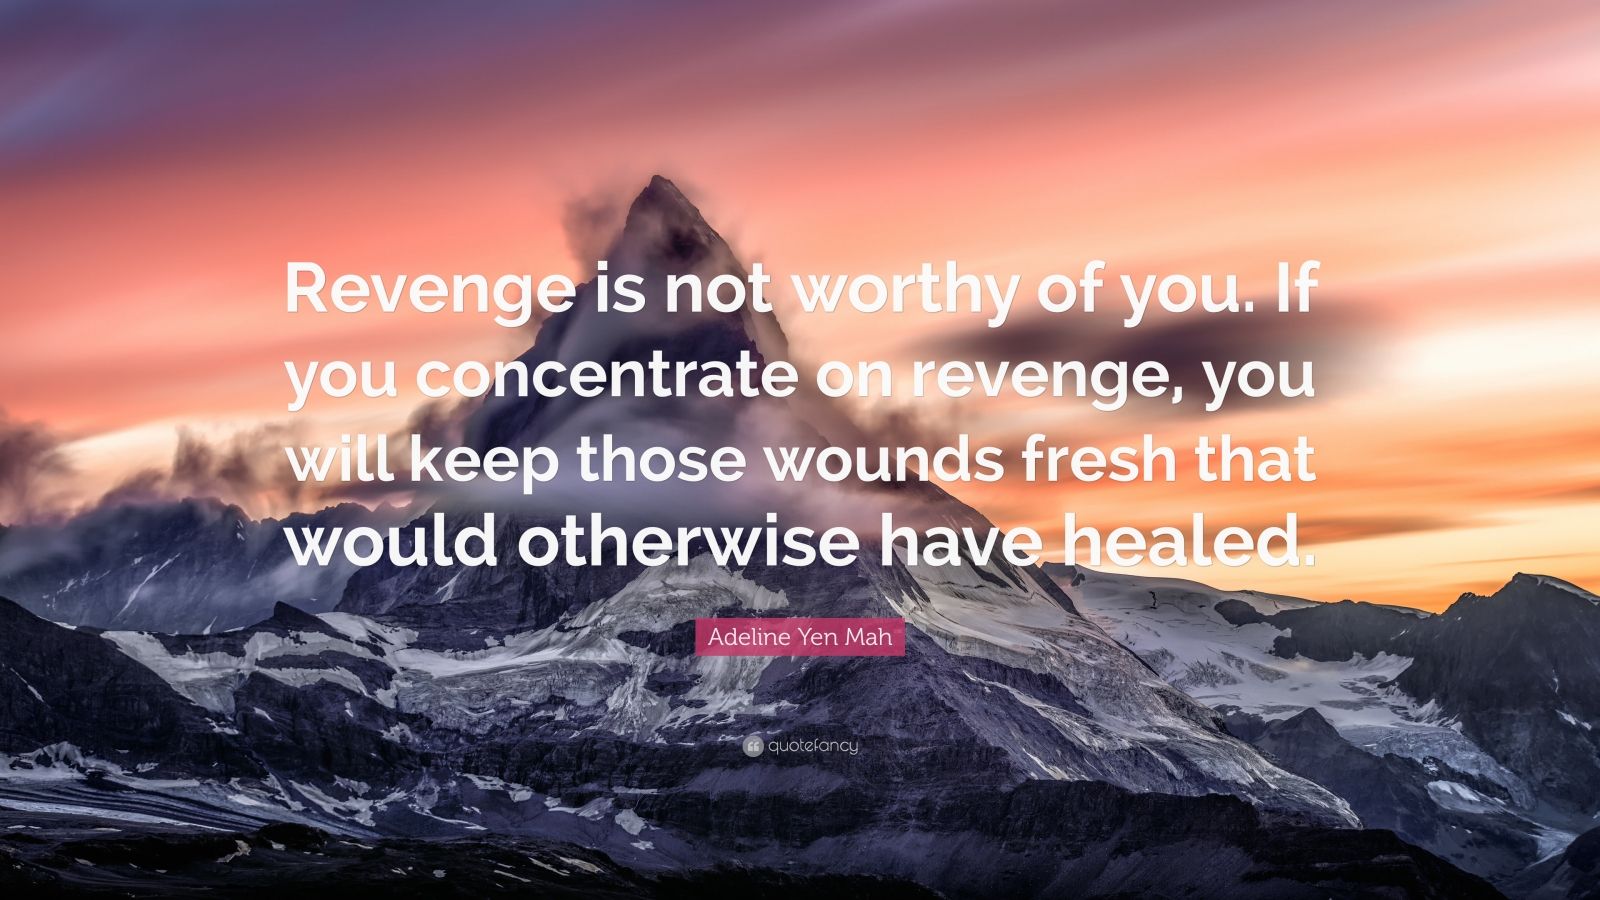 Adeline Yen Mah Quote: “Revenge is not worthy of you. If you ...